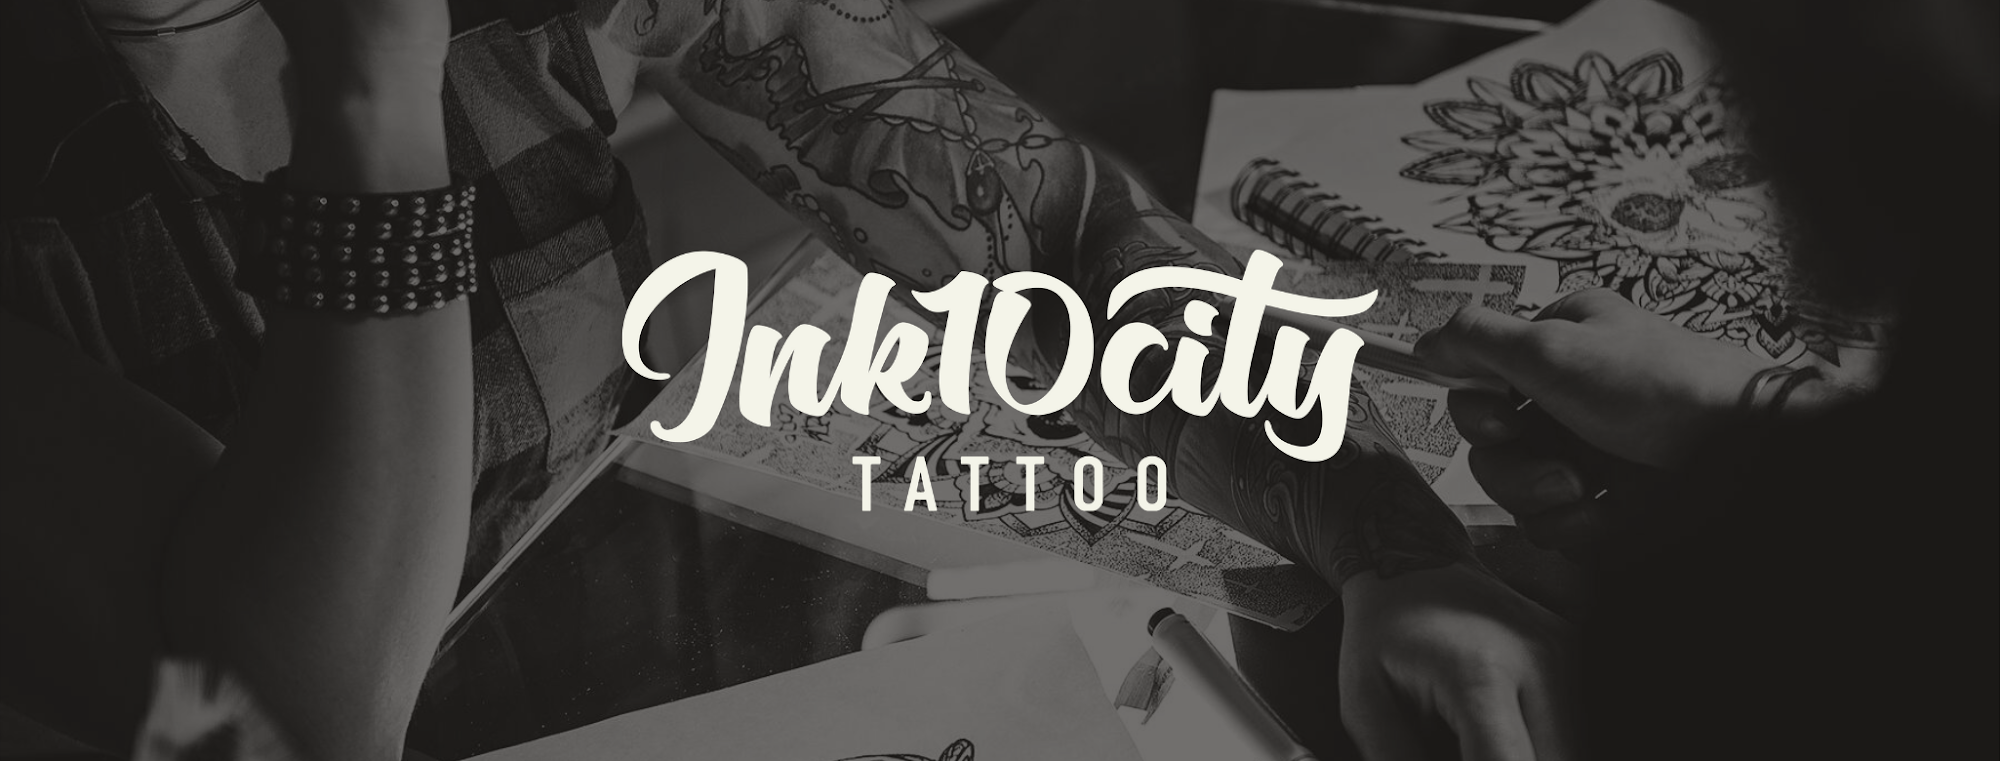 Ink10city Tattoo Shop